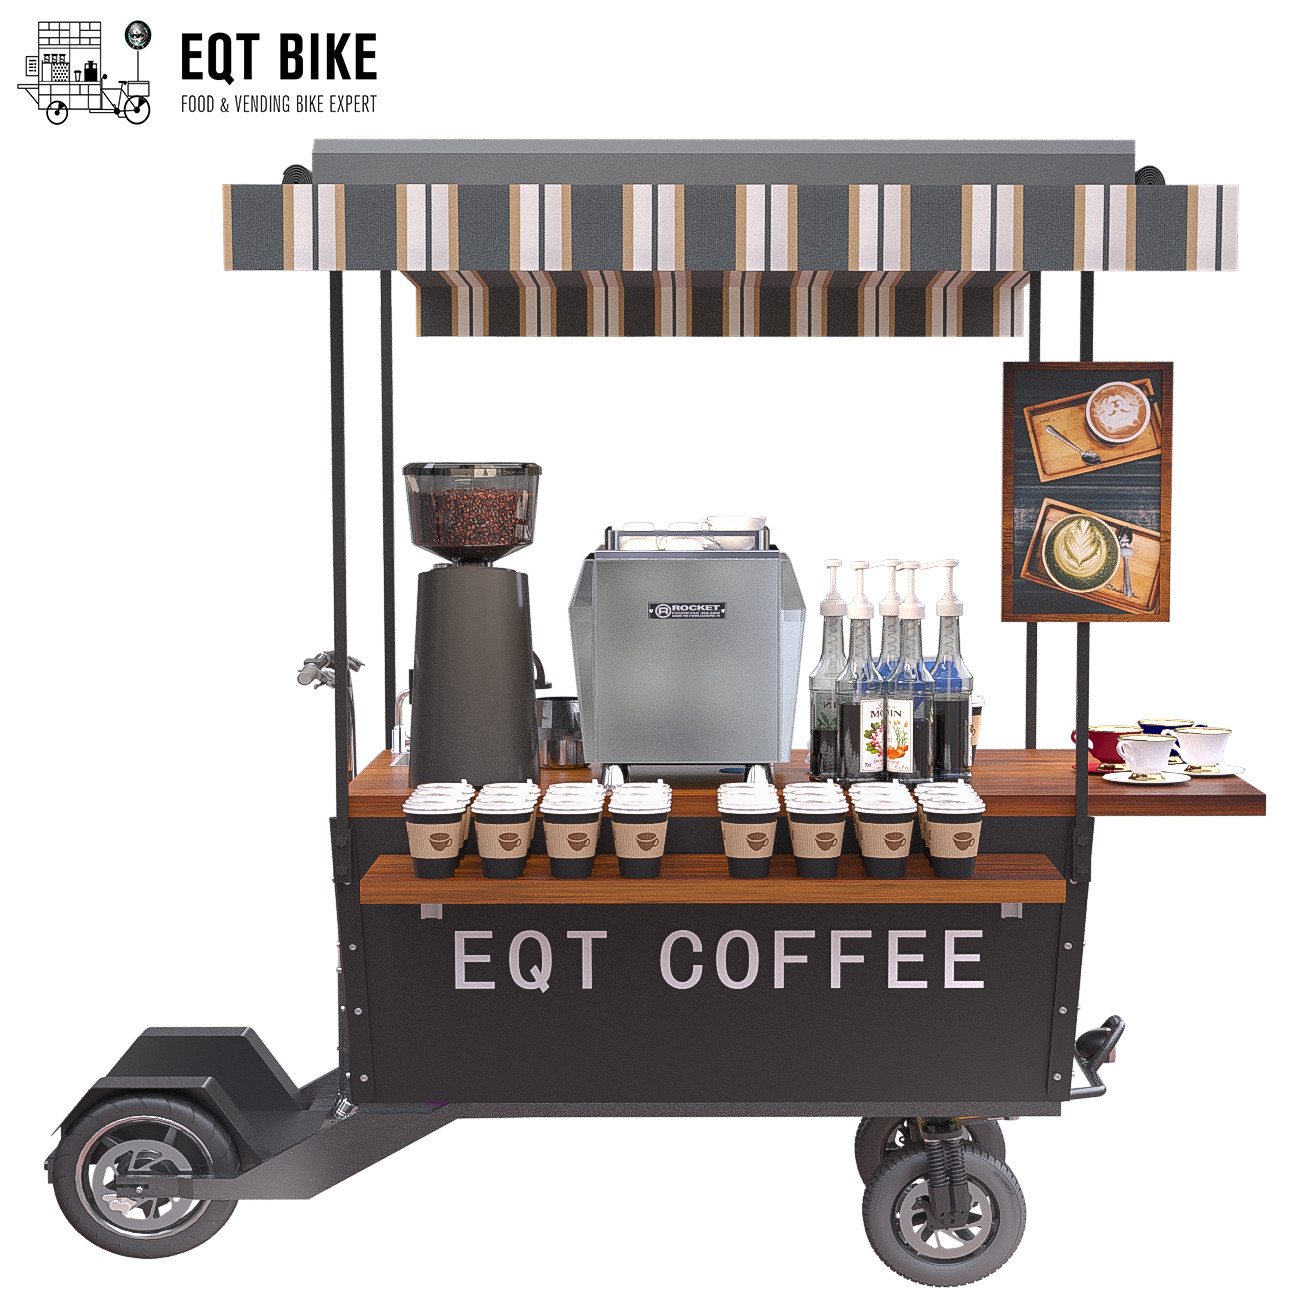 SS Tabletop Business Scooter Coffee Bike Cart Tải 300KG